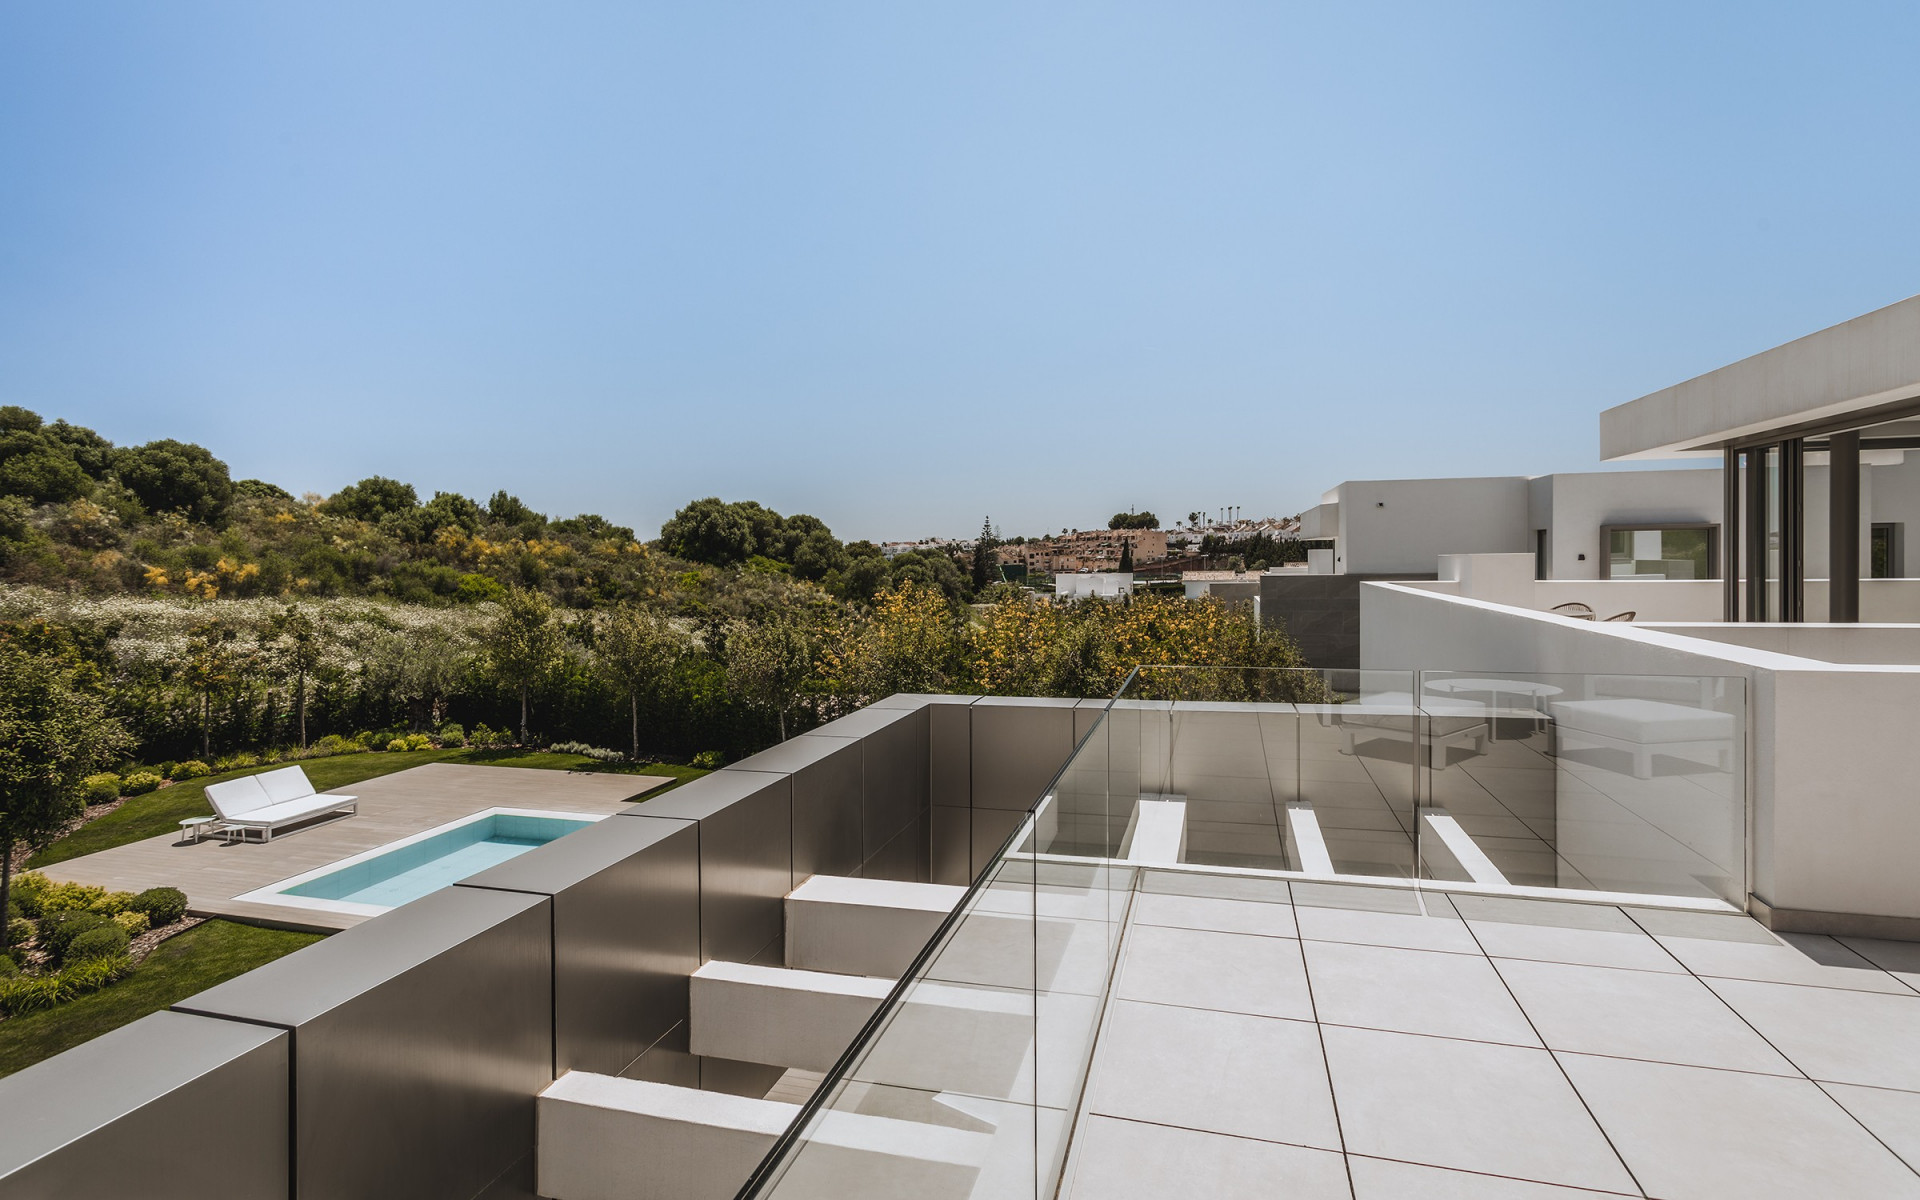 Brand new detached modern villas in Paraiso Alto